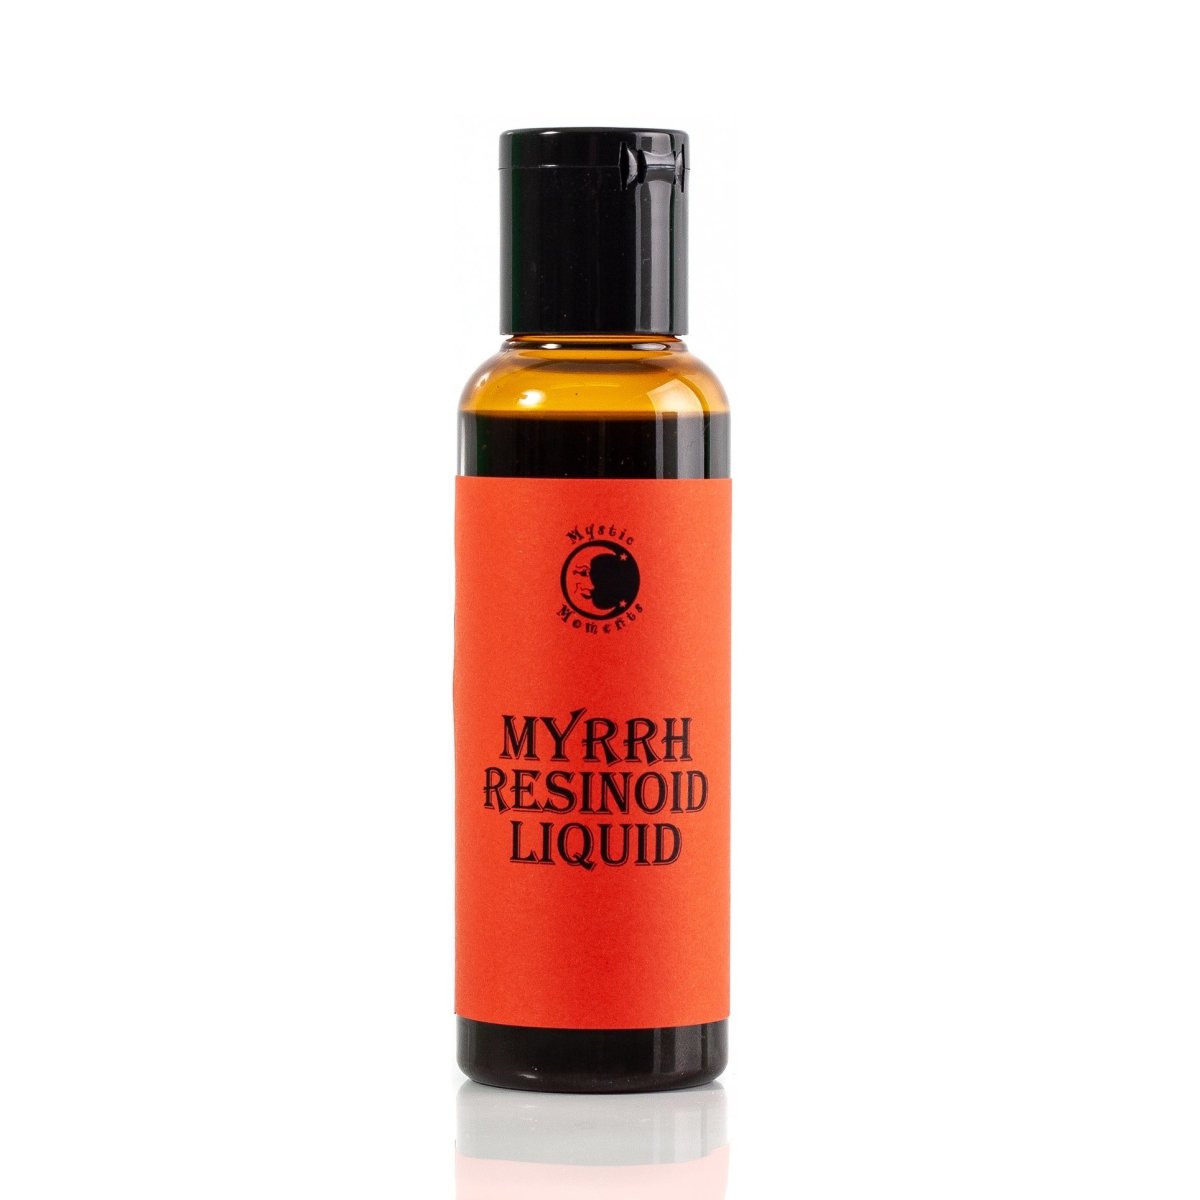 Myrrh Resinoid Liquid - Mystic Moments UK